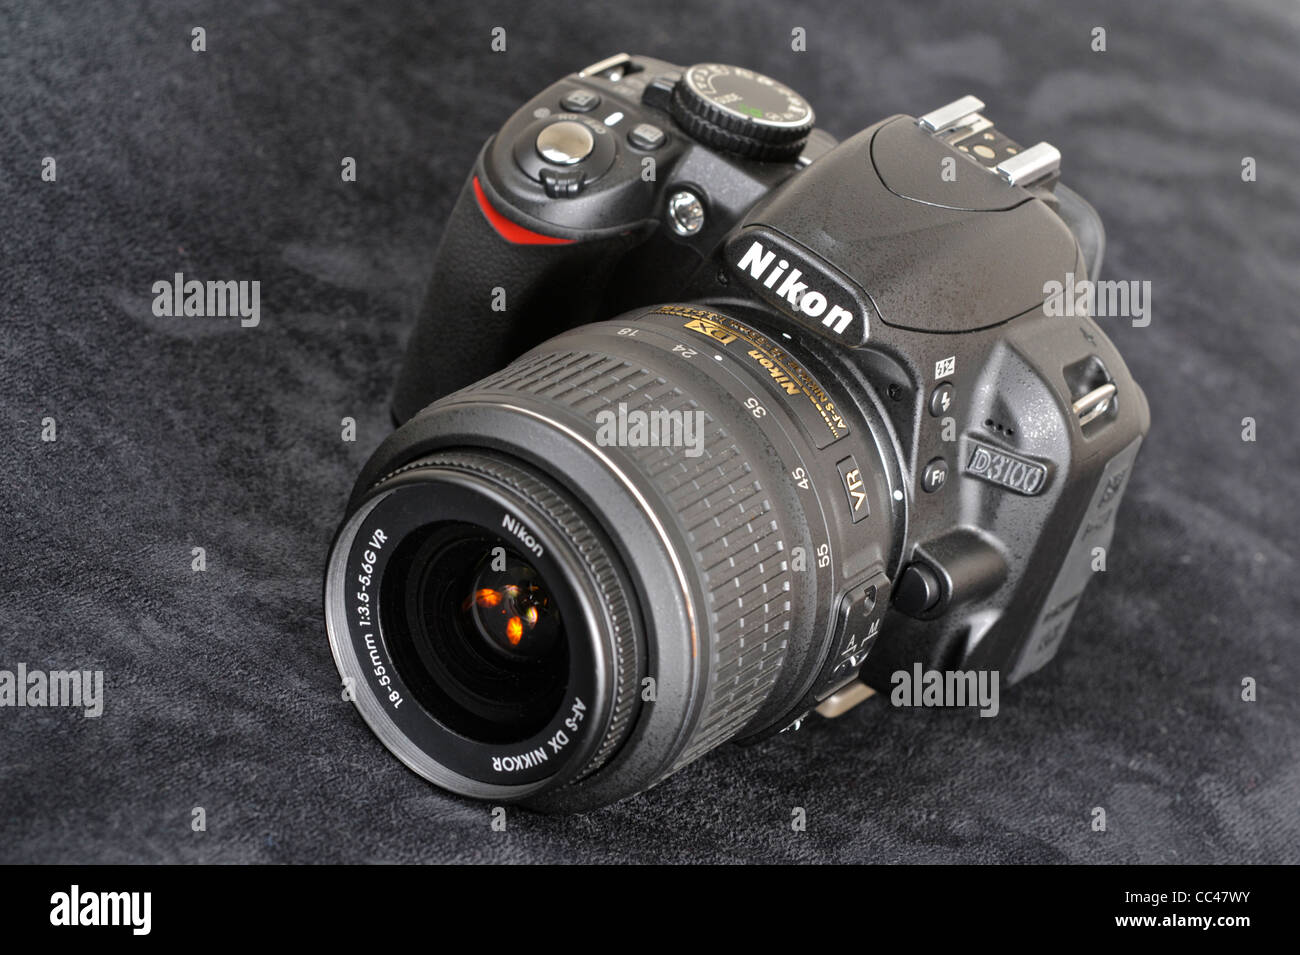 Nikon D3100 with 18-55 kit lens Stock Photo